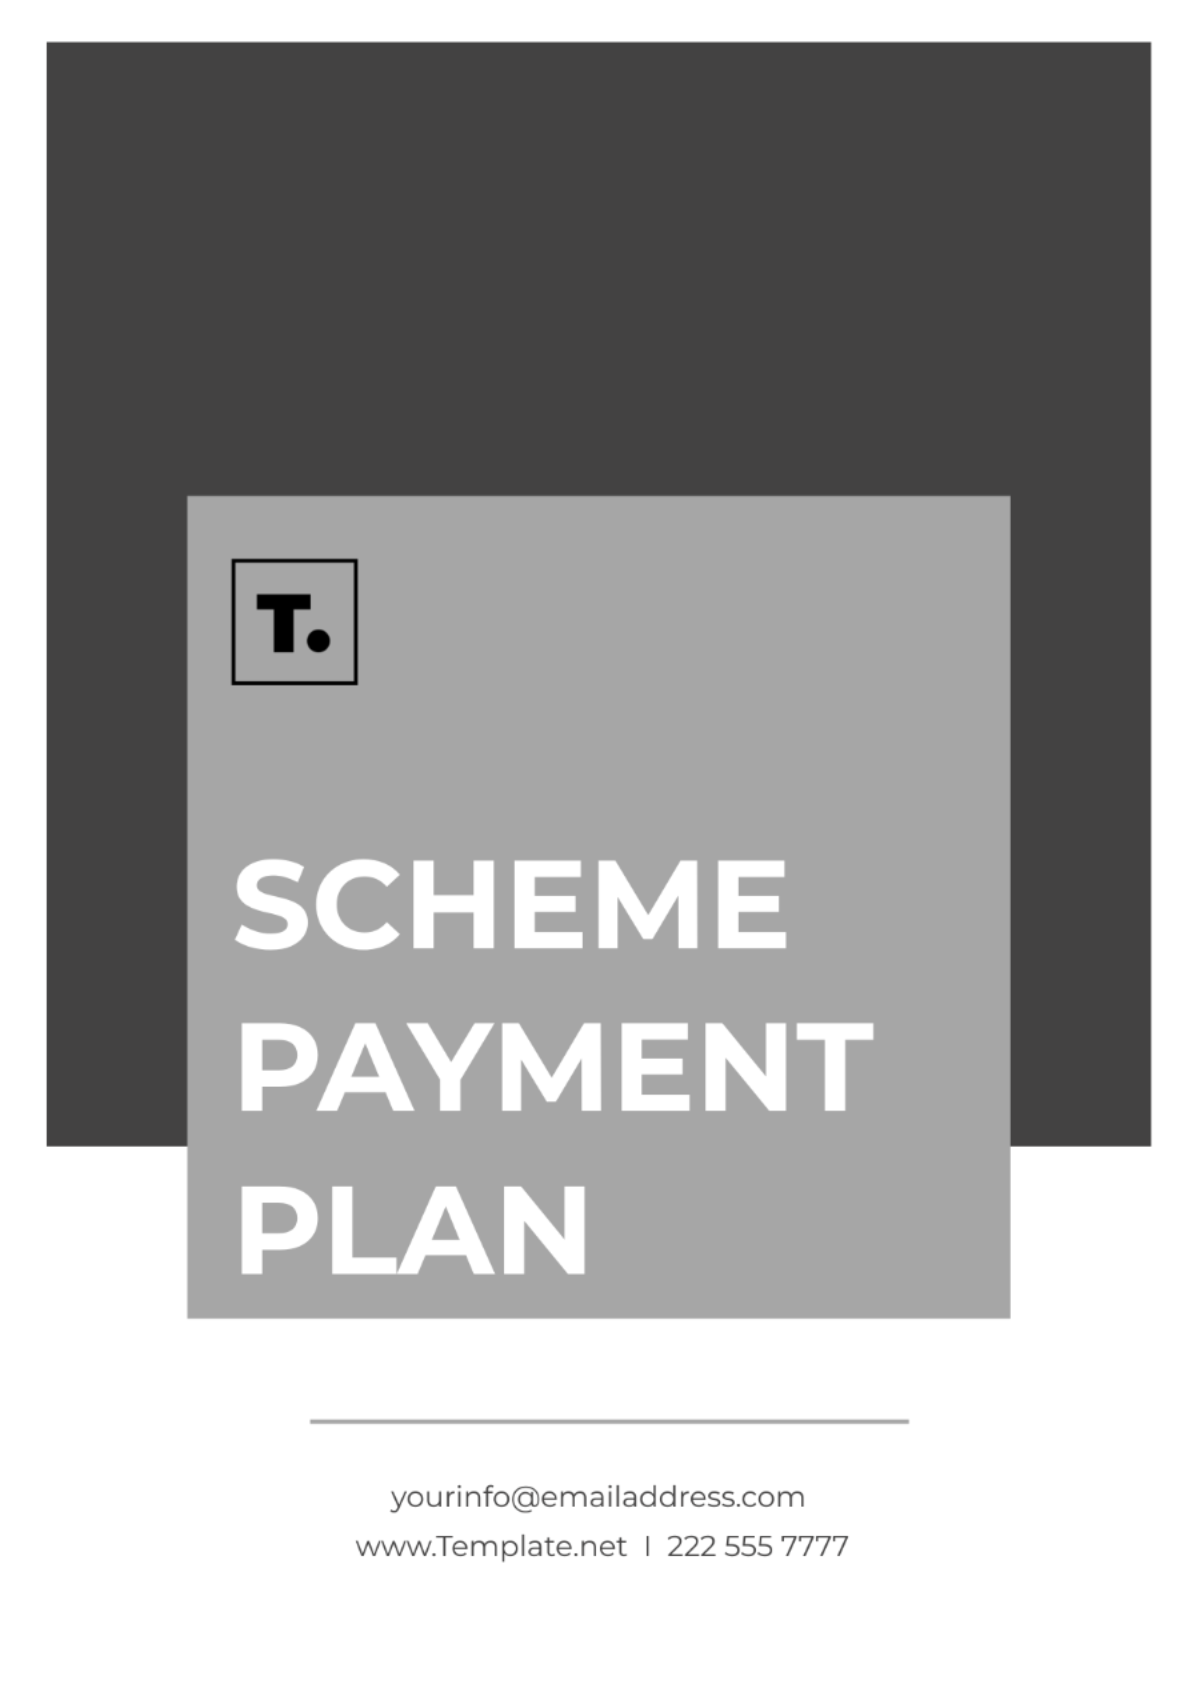 Free Scheme Payment Plan Template